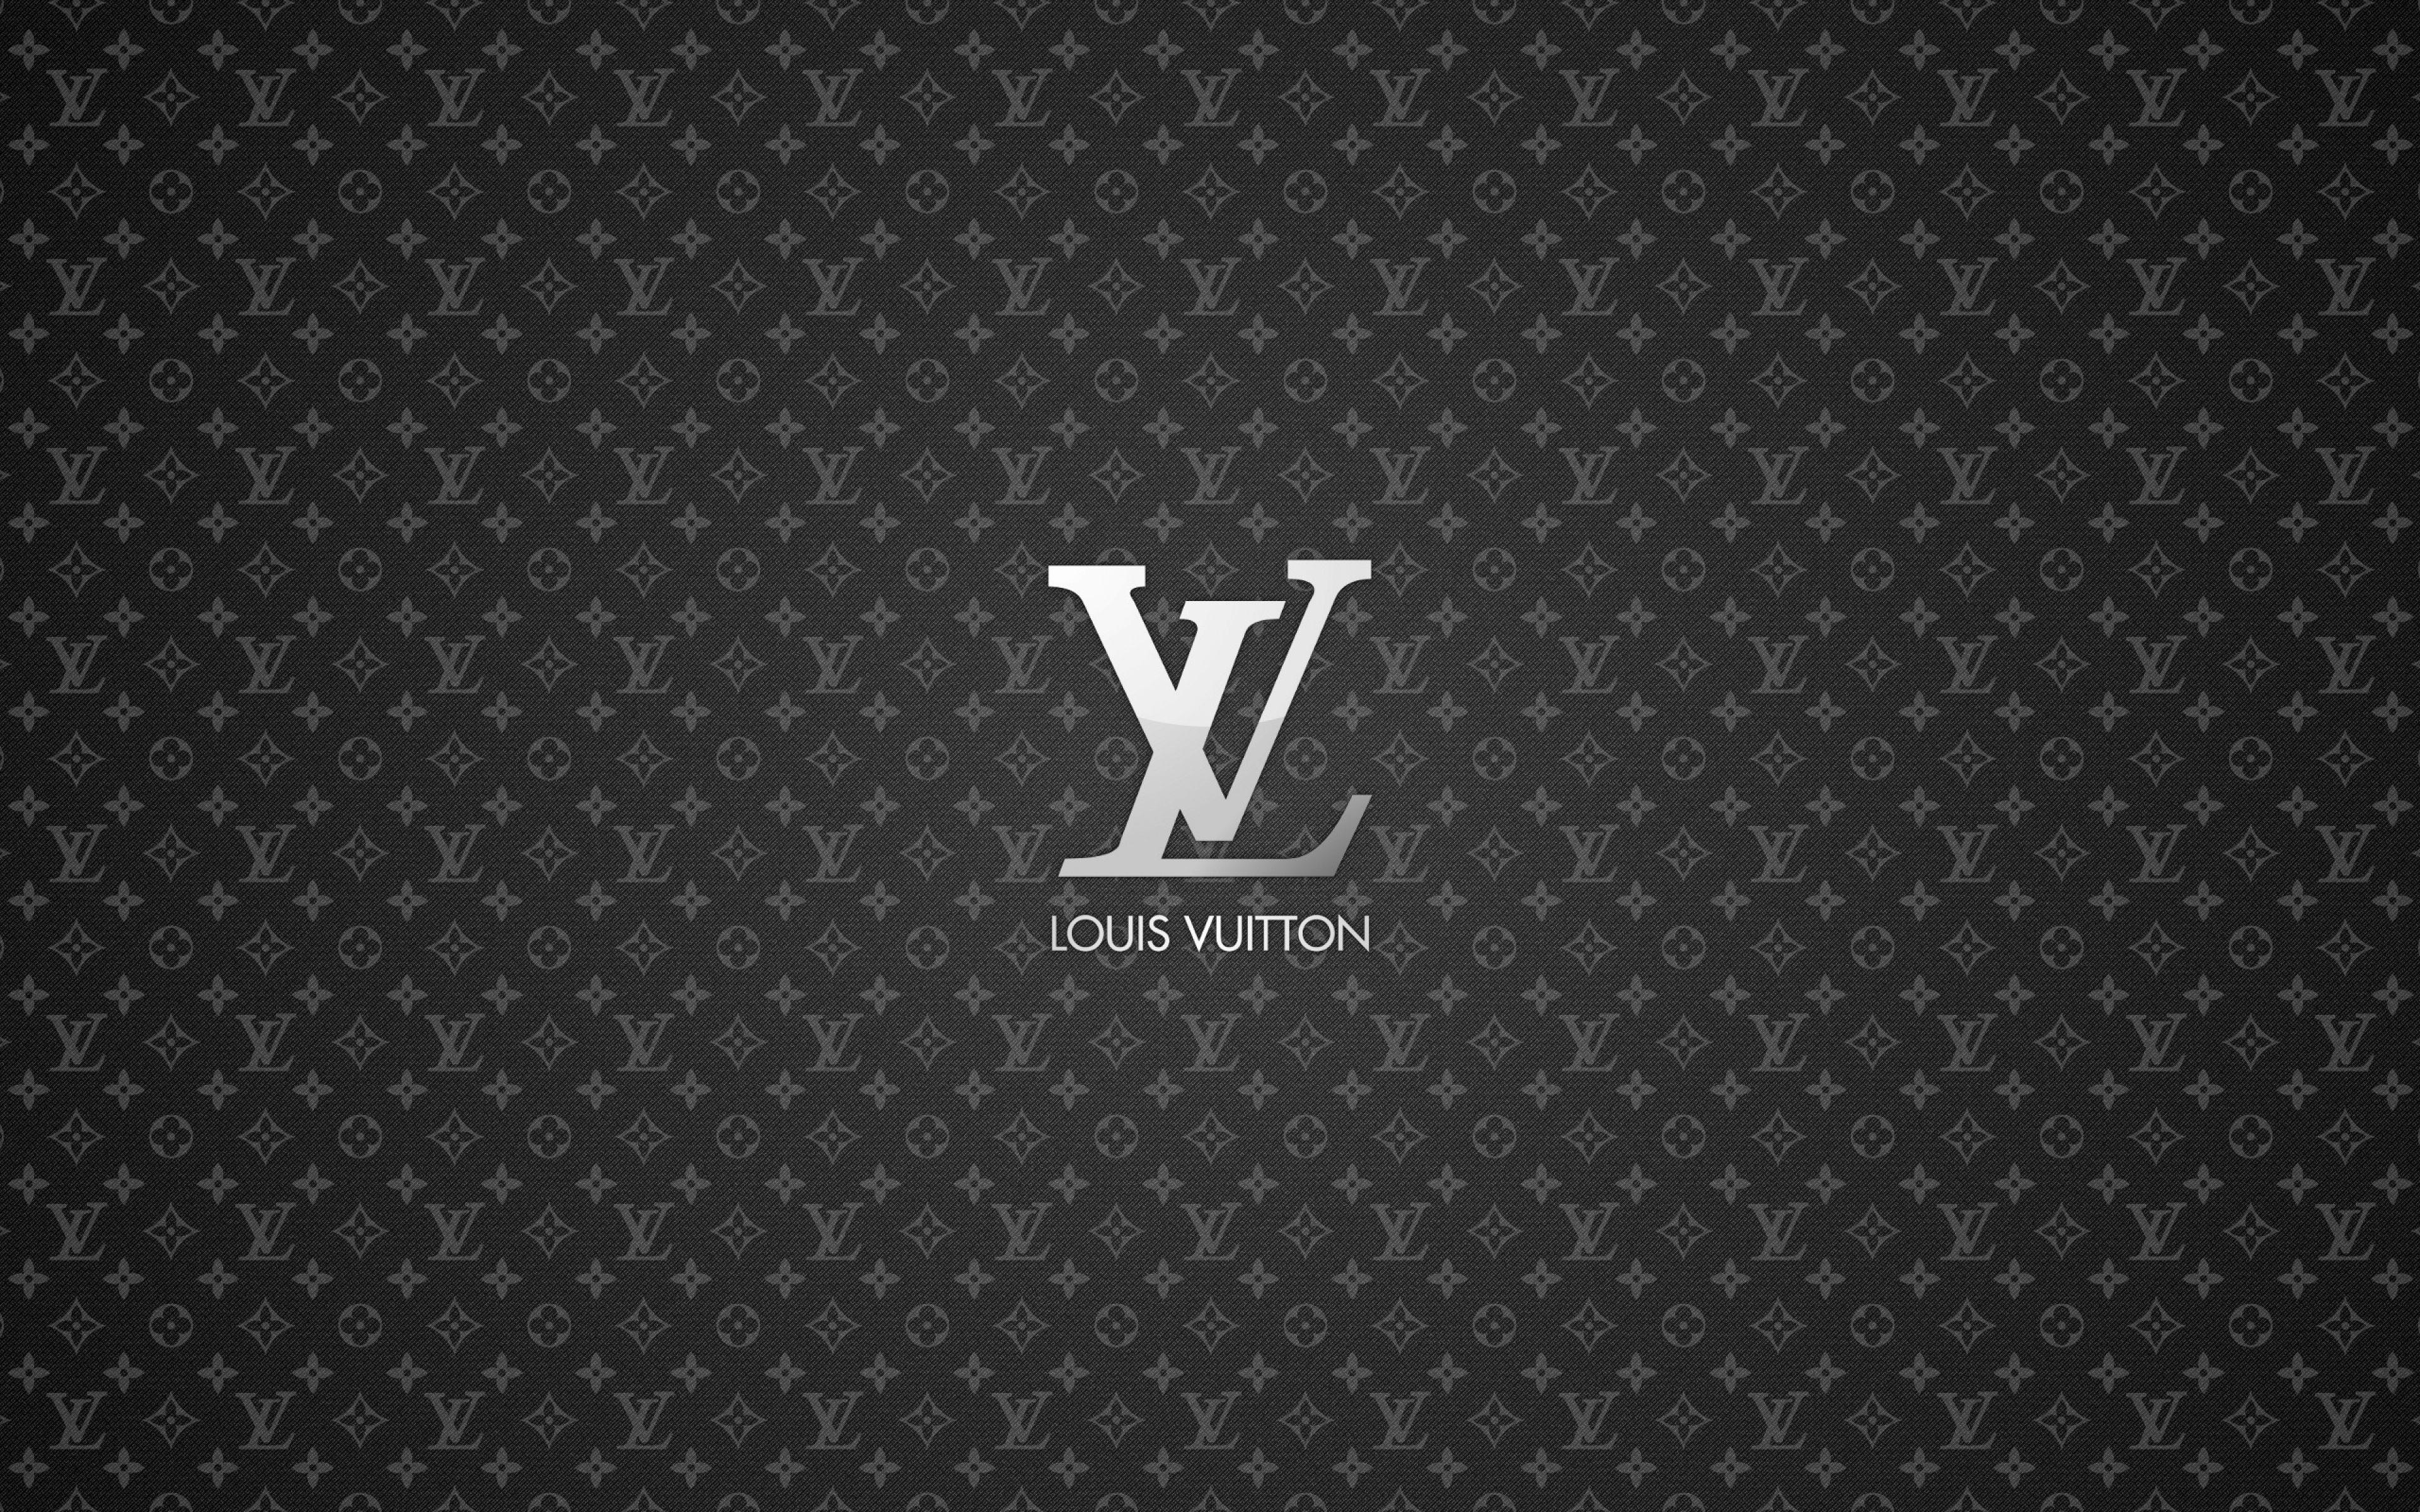 Black and White Louis Vuitton Monogram - Luxurydotcom - iTunes app photo